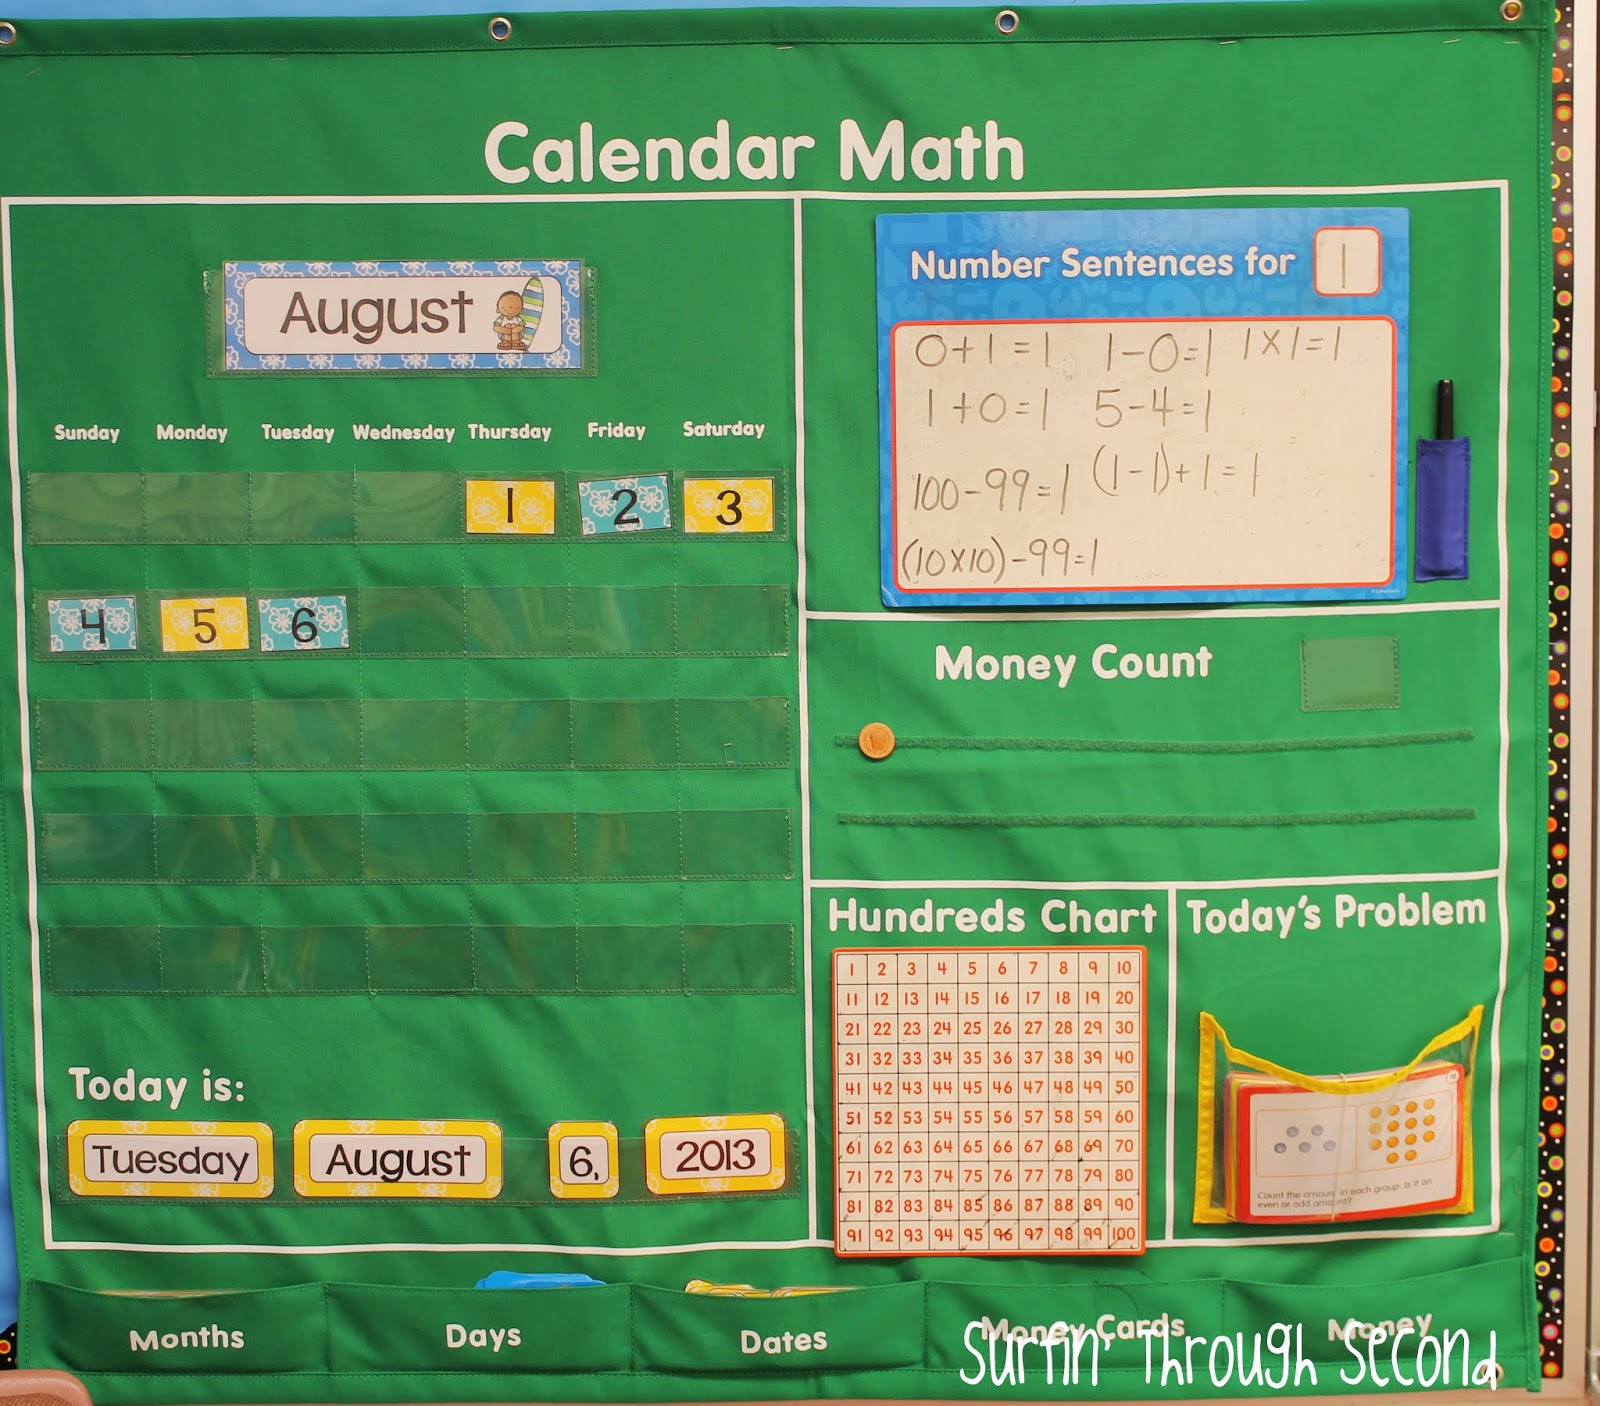 Calendar Math and The First Week Back Surfin' Through Second